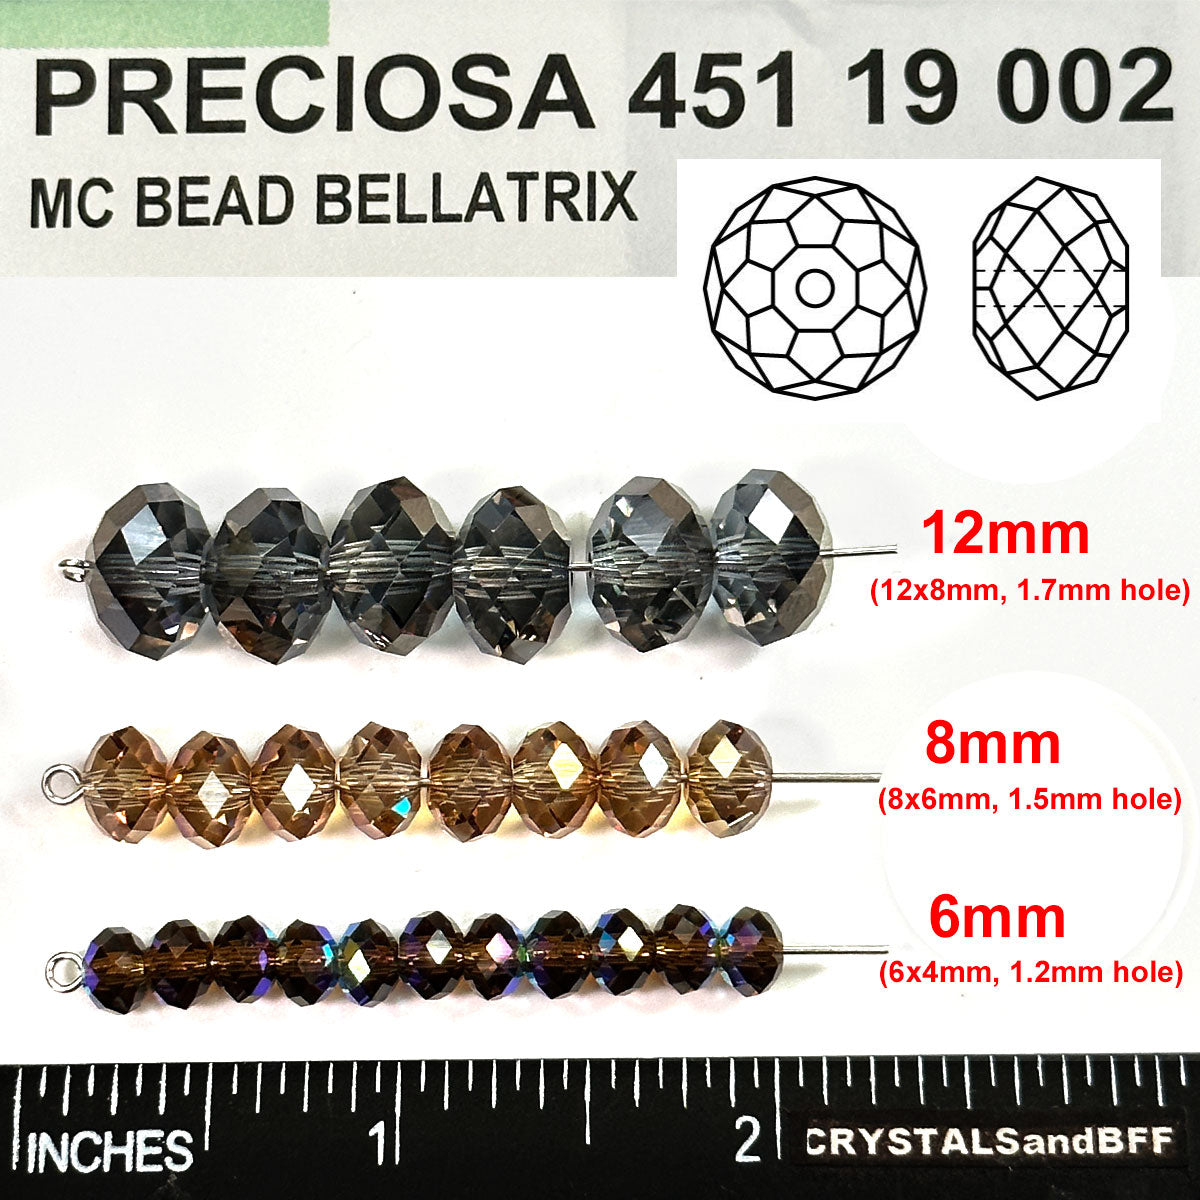 Light Colorado Topaz AB coated, Czech Machine Cut Bellatrix Crystal Beads, Preciosa 451-19-002, 6mm, 36pcs, light brown with Aurora Boreale spacer beads, #5040 Briolette cut